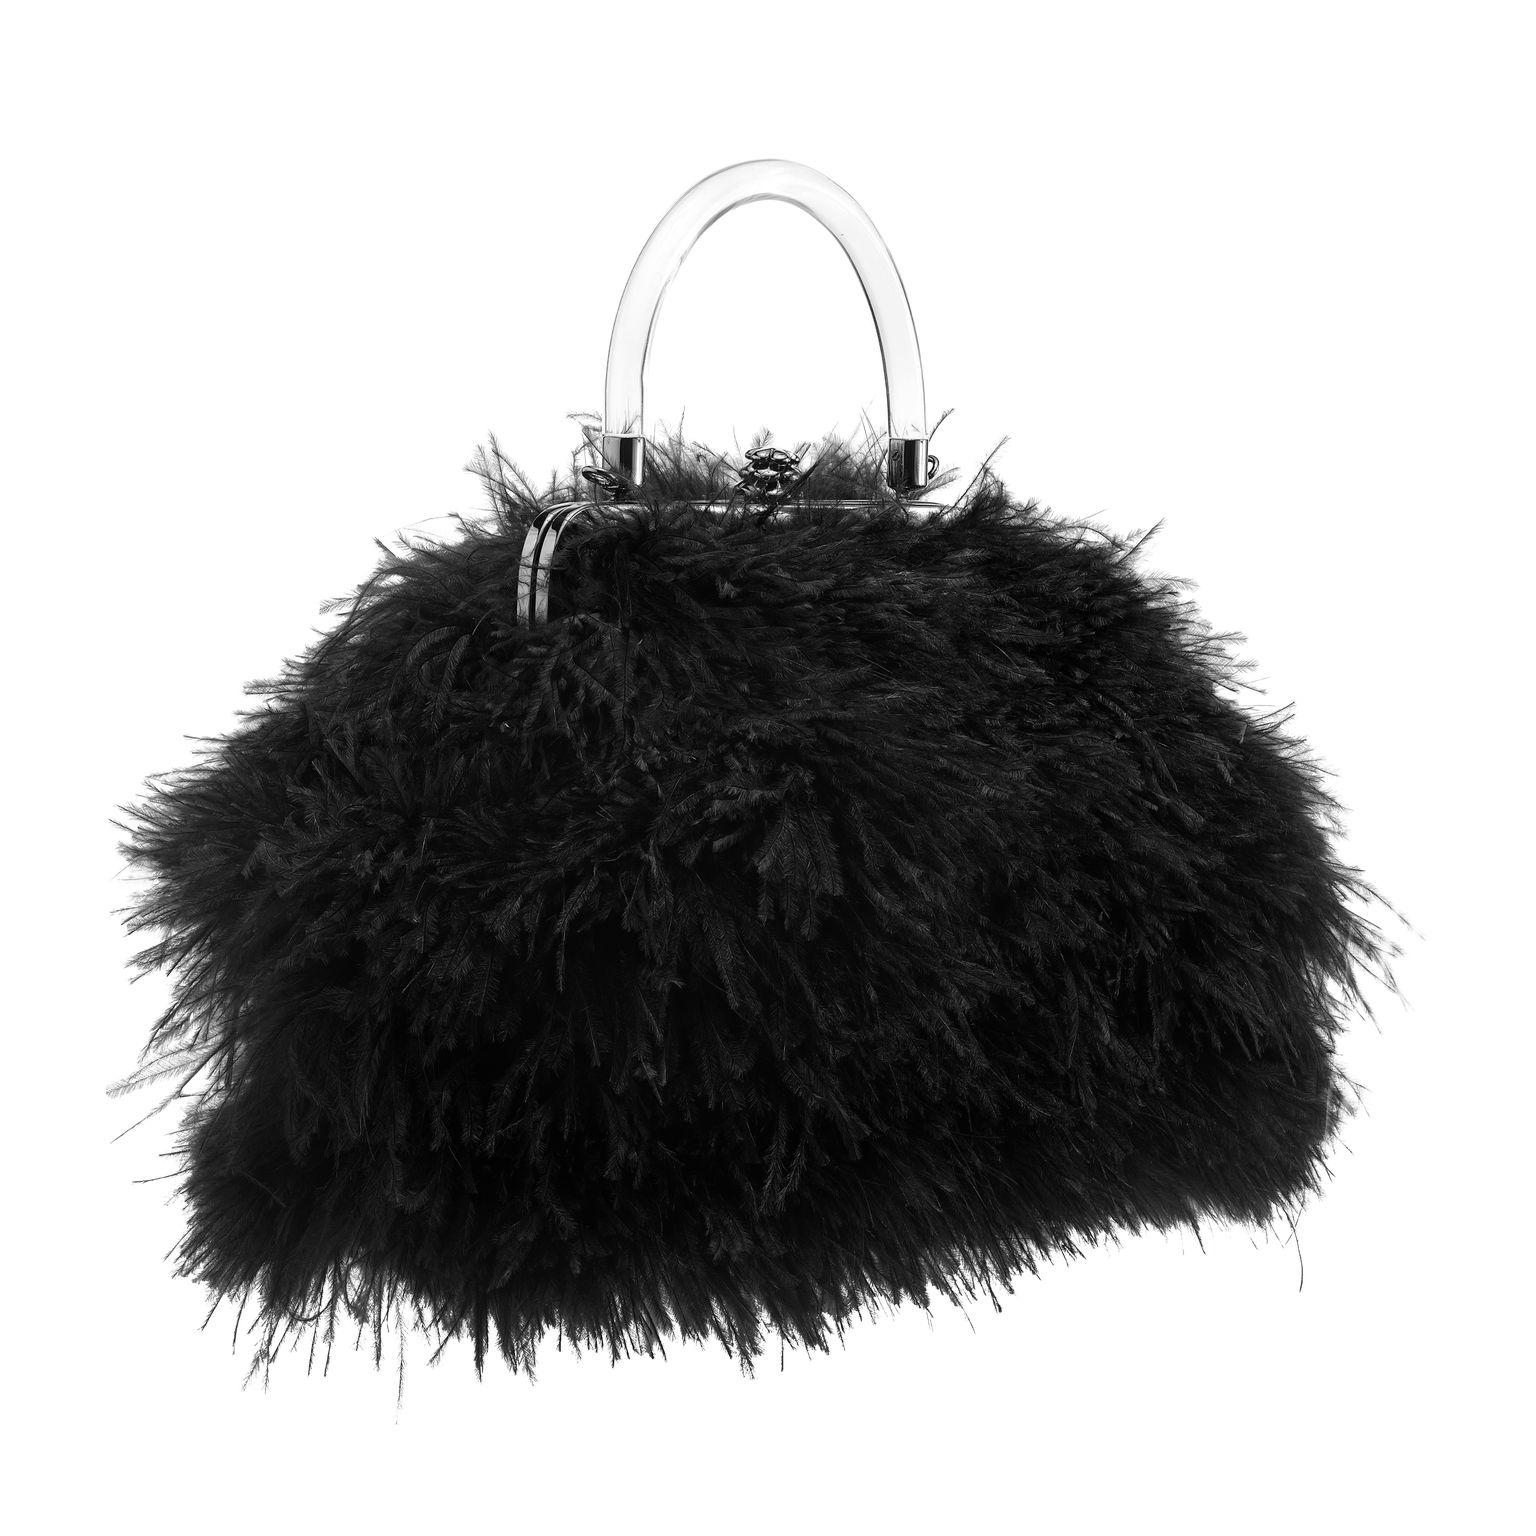 TYLER ELLIS Poppy Handbag Small in Black Ostrich Feathers with Gunmetal ...